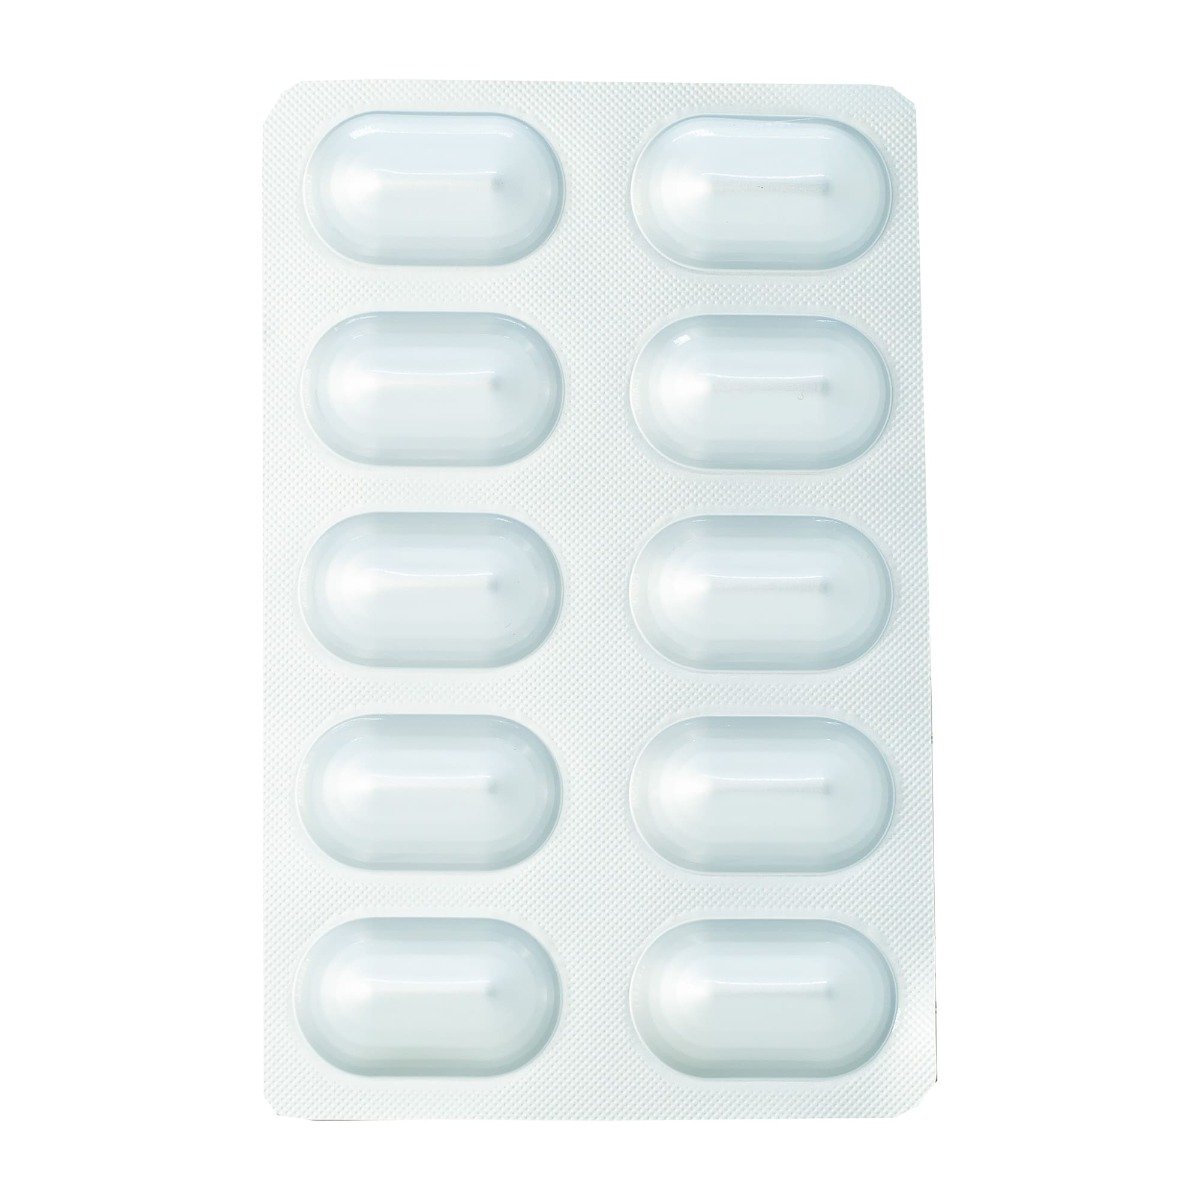 Foradil 12 mcg - 1 Inhaler & 30 Capsules - Bloom Pharmacy